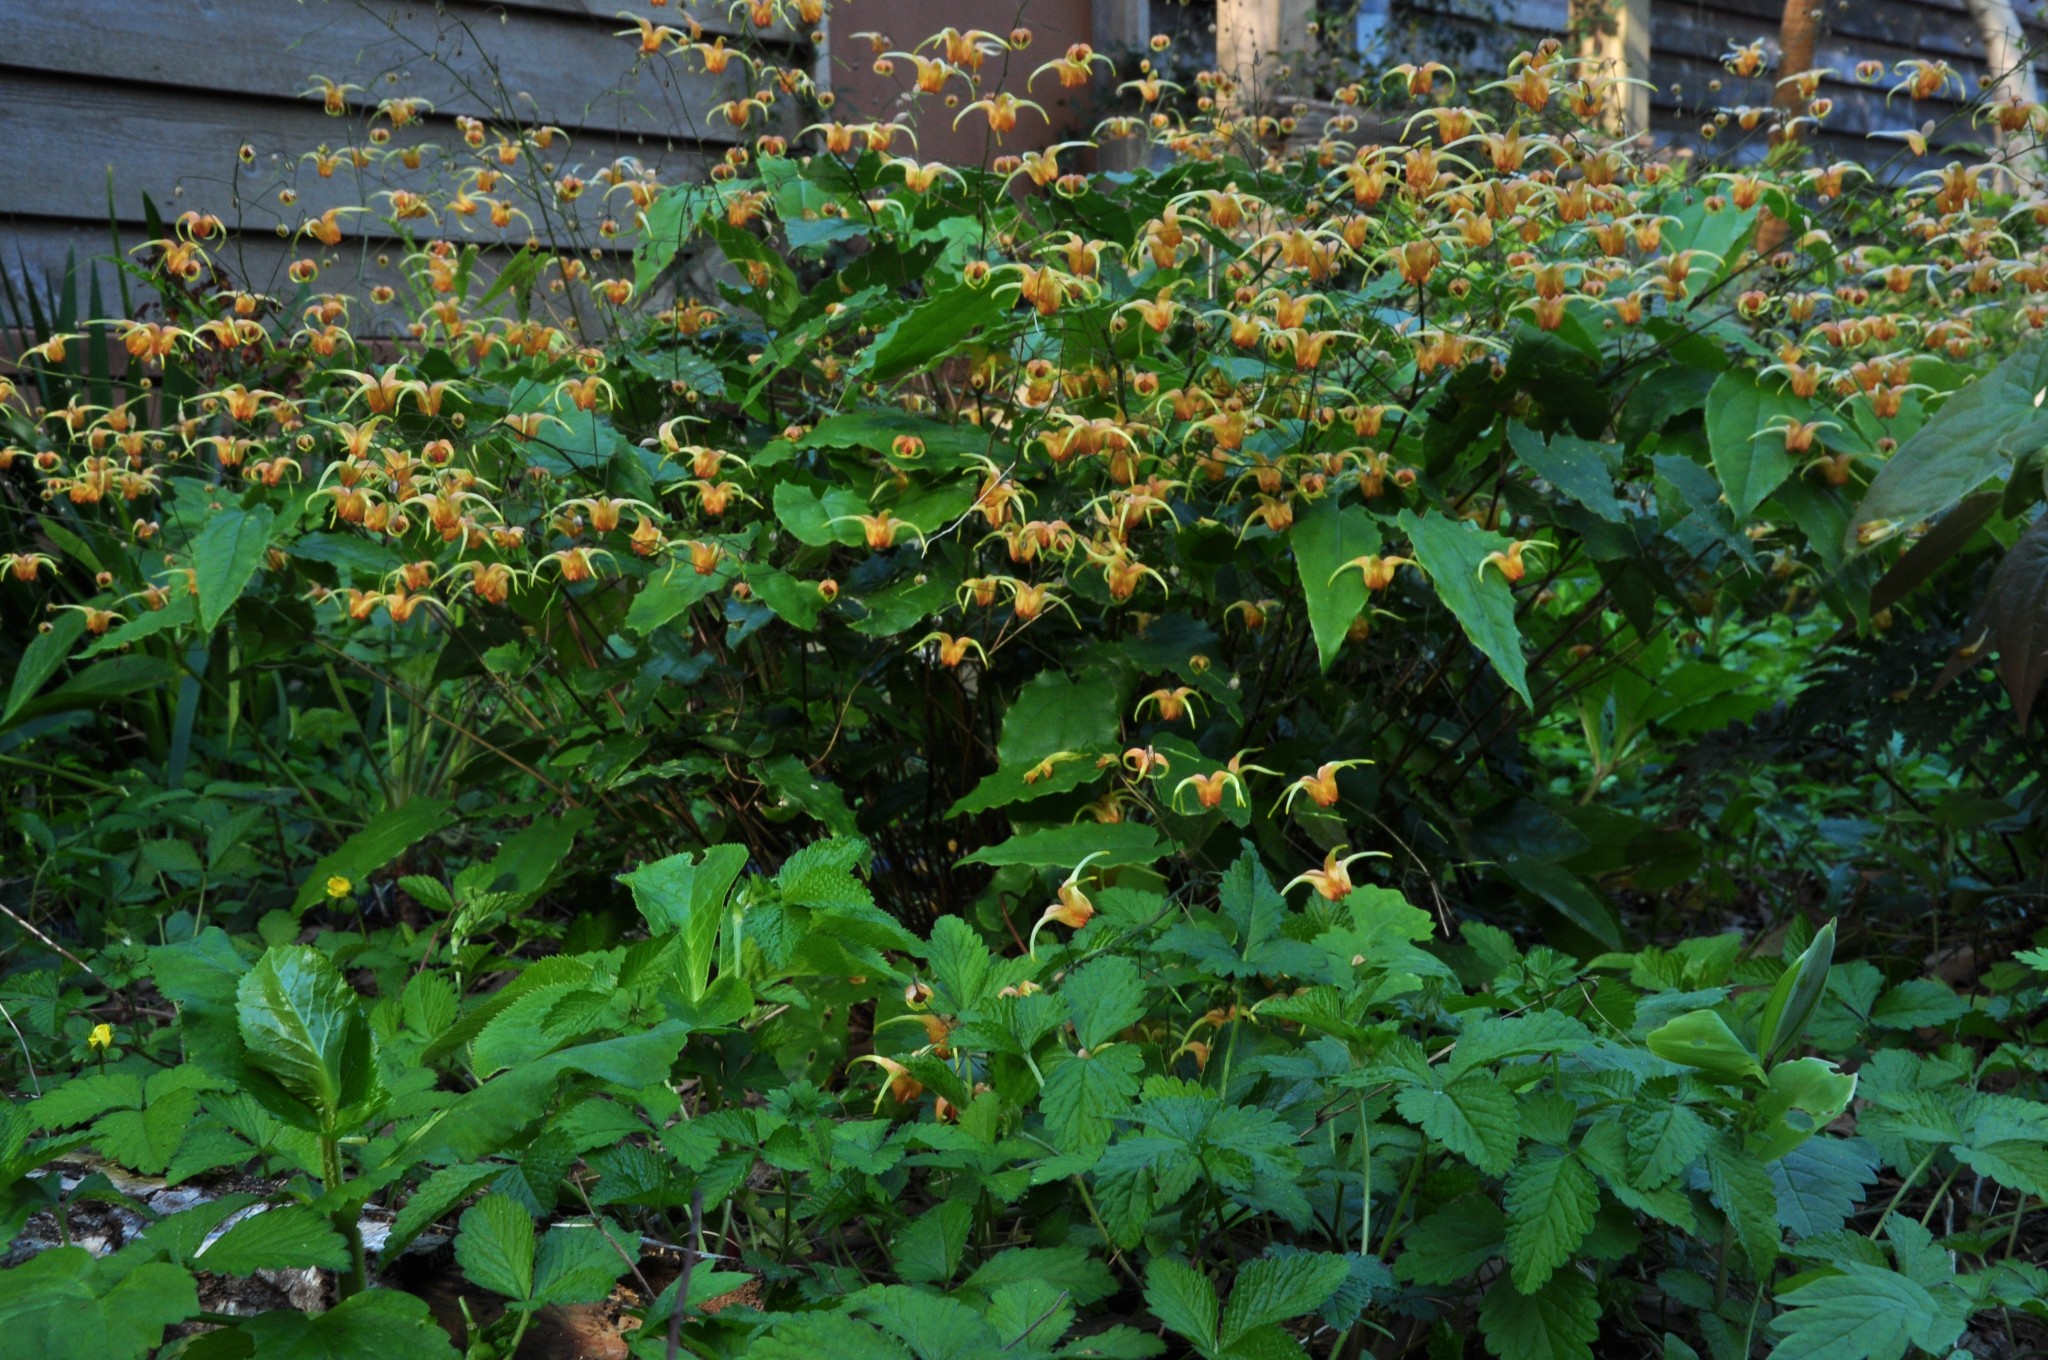 PLANT OF THE WEEK #74: Epimedium Amber Queen